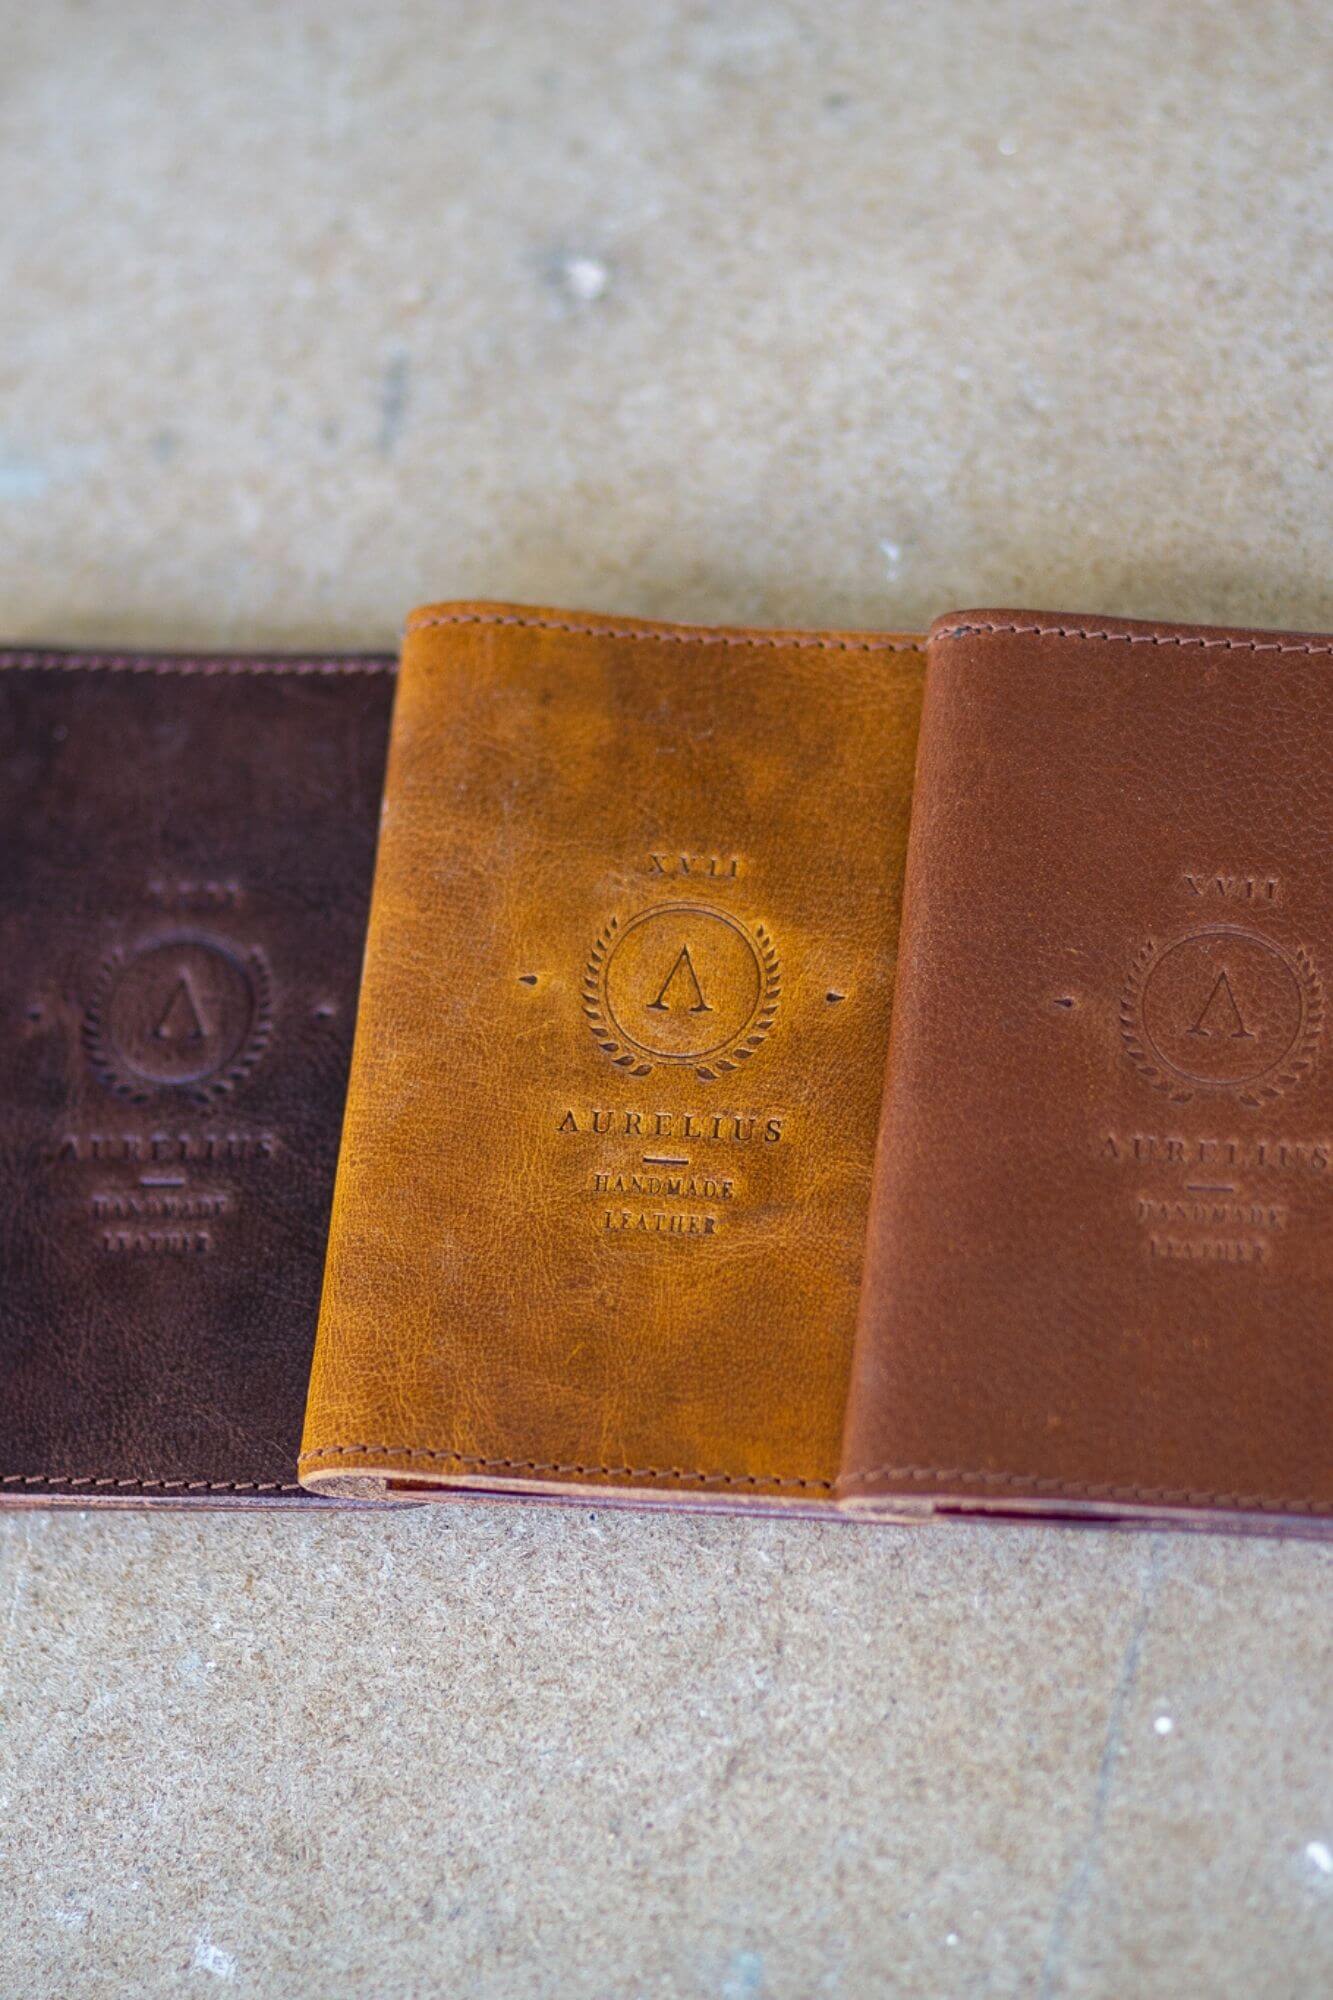 Aurelius Leather Leather Bag Dark Crunch Leather Passport and Card Holder Dark Crunchy Leather Passport and Card Holder